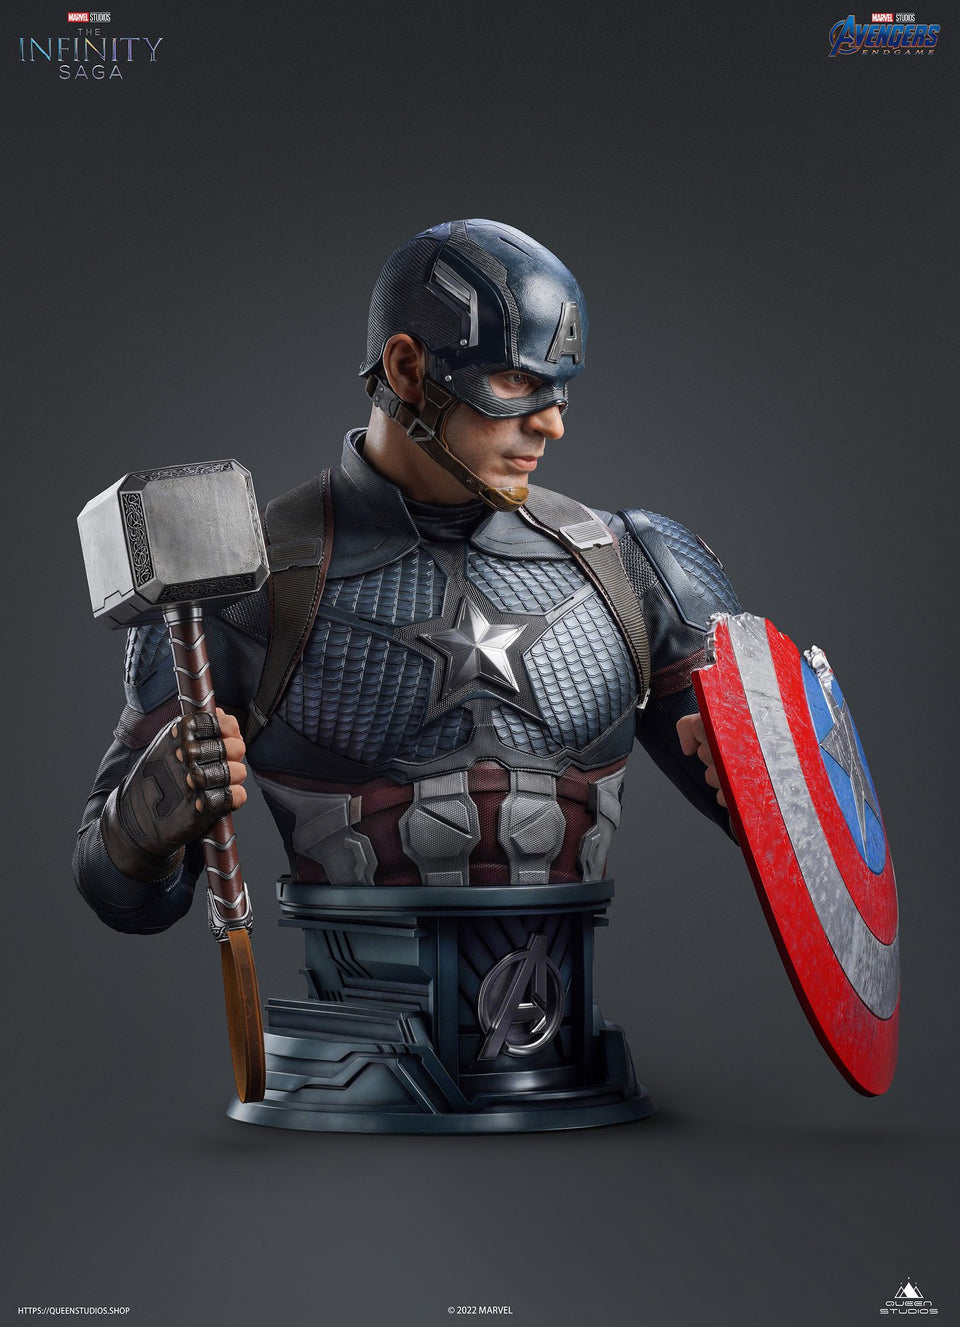 Queen Studios Captain America Life-Size (Bust) 1/1 Scale Statue